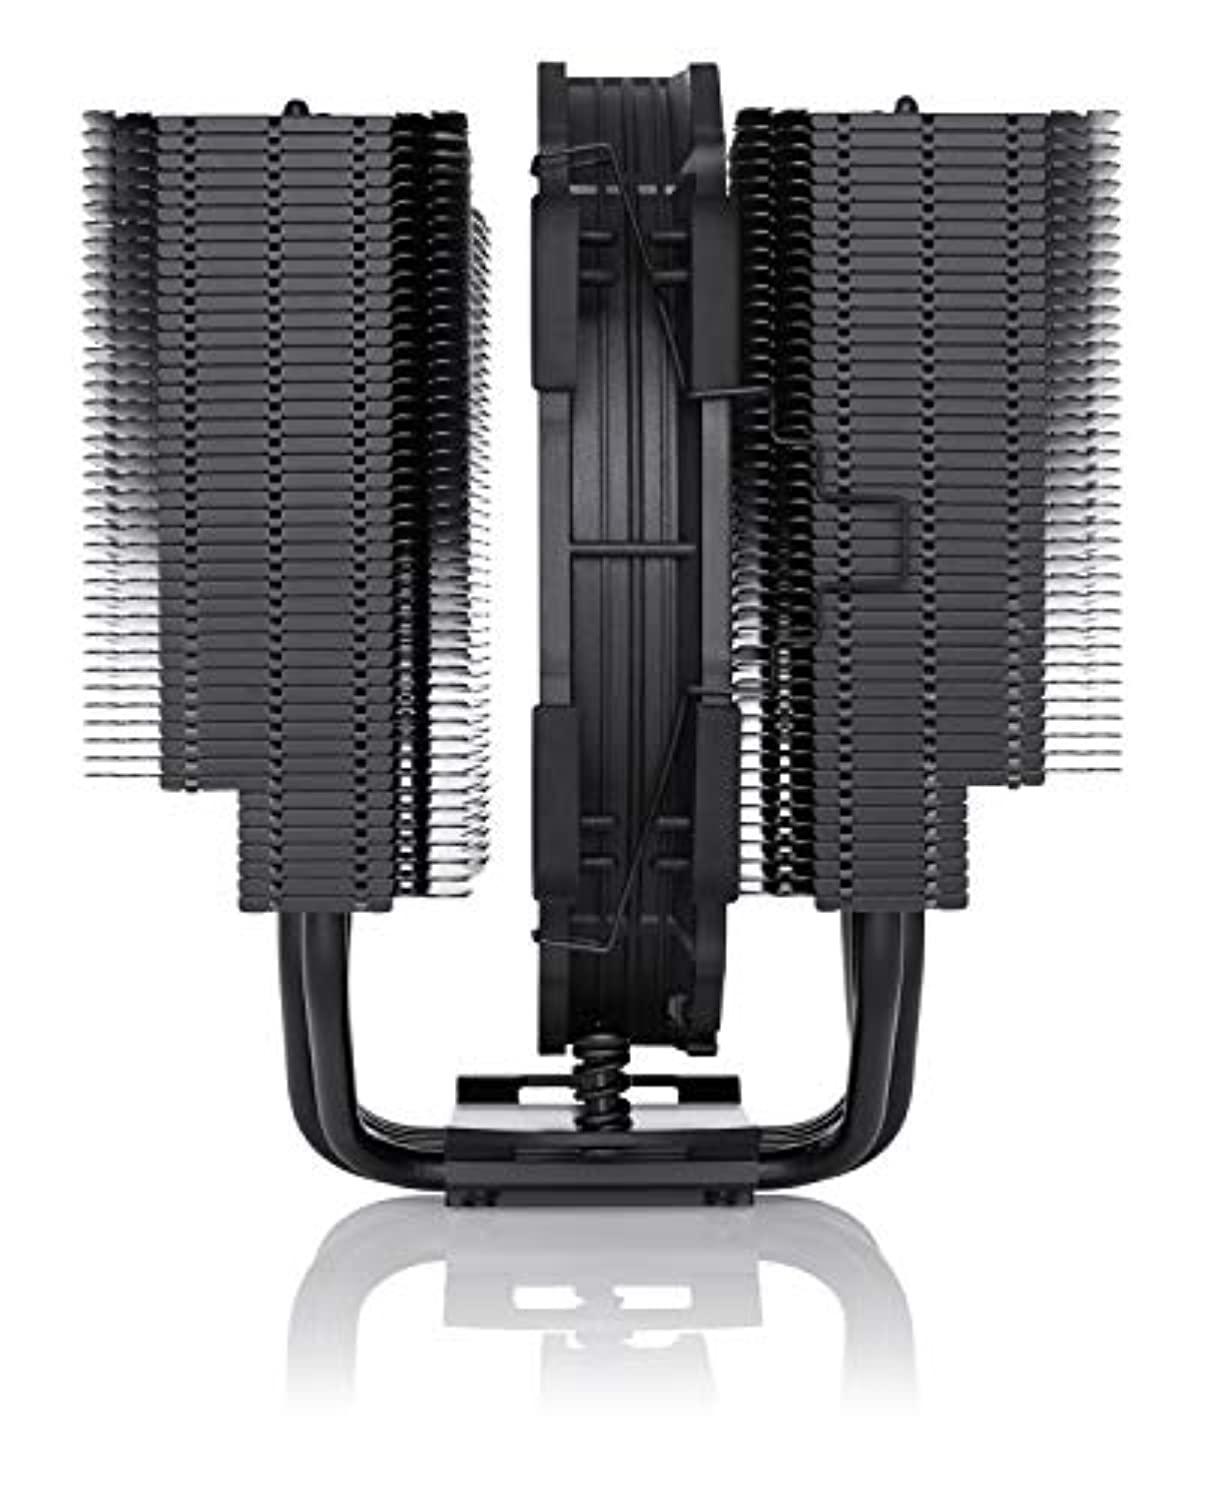 noctua nh-d15s chromax.black, premium dual-tower cpu cooler with nf-a15 pwm 140mm fan (black)